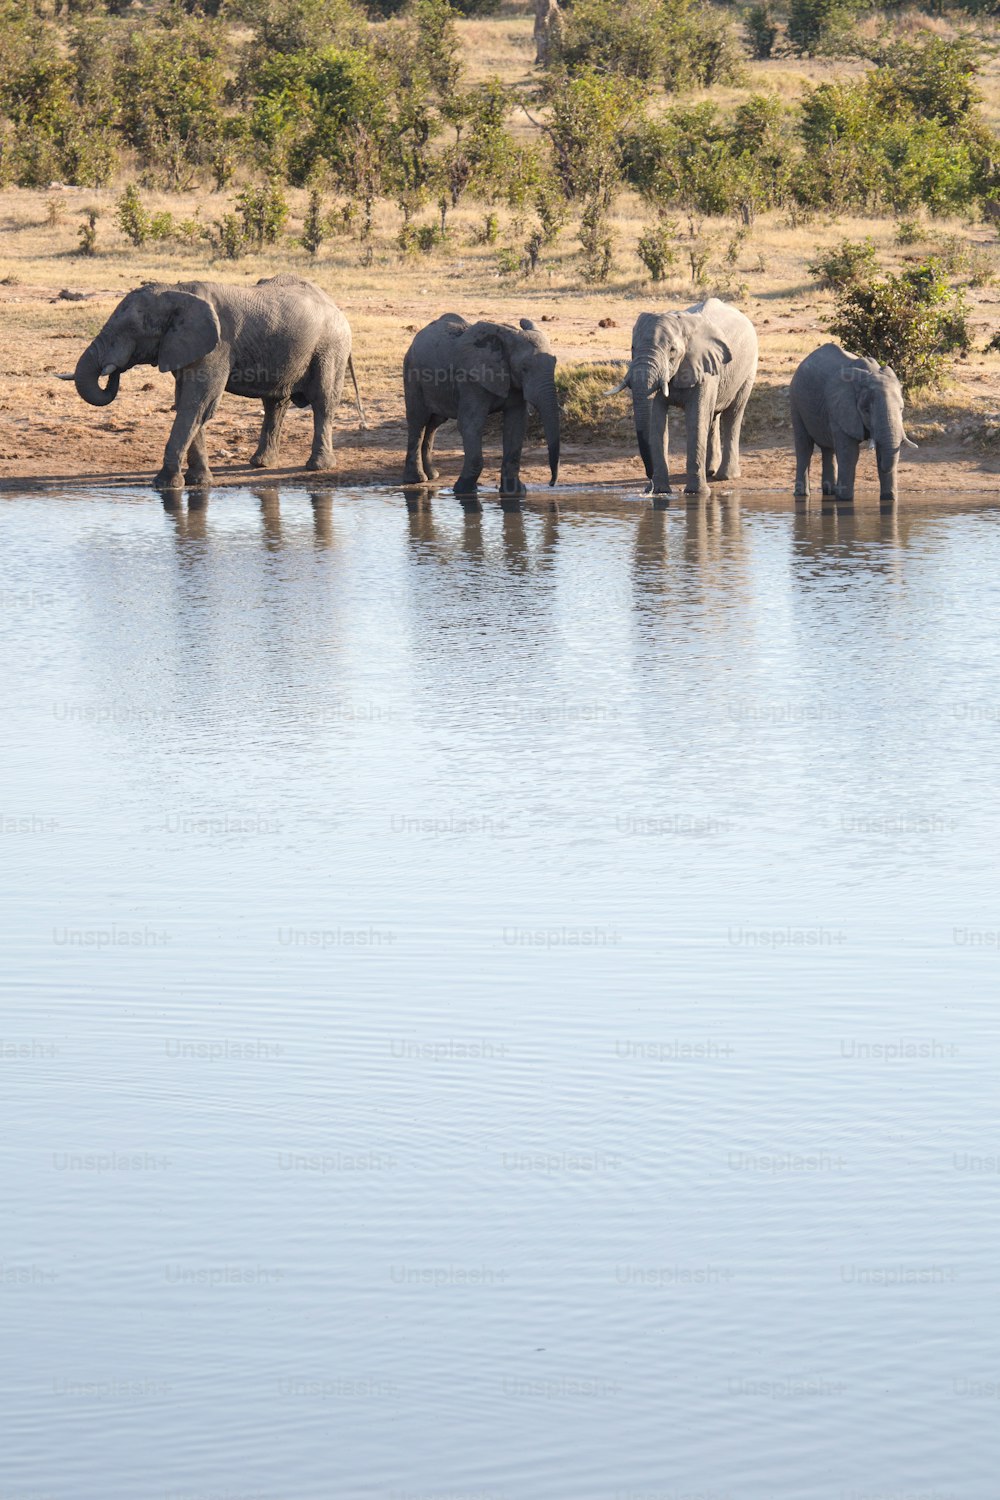 Drinking Elephants in Zimbabwe